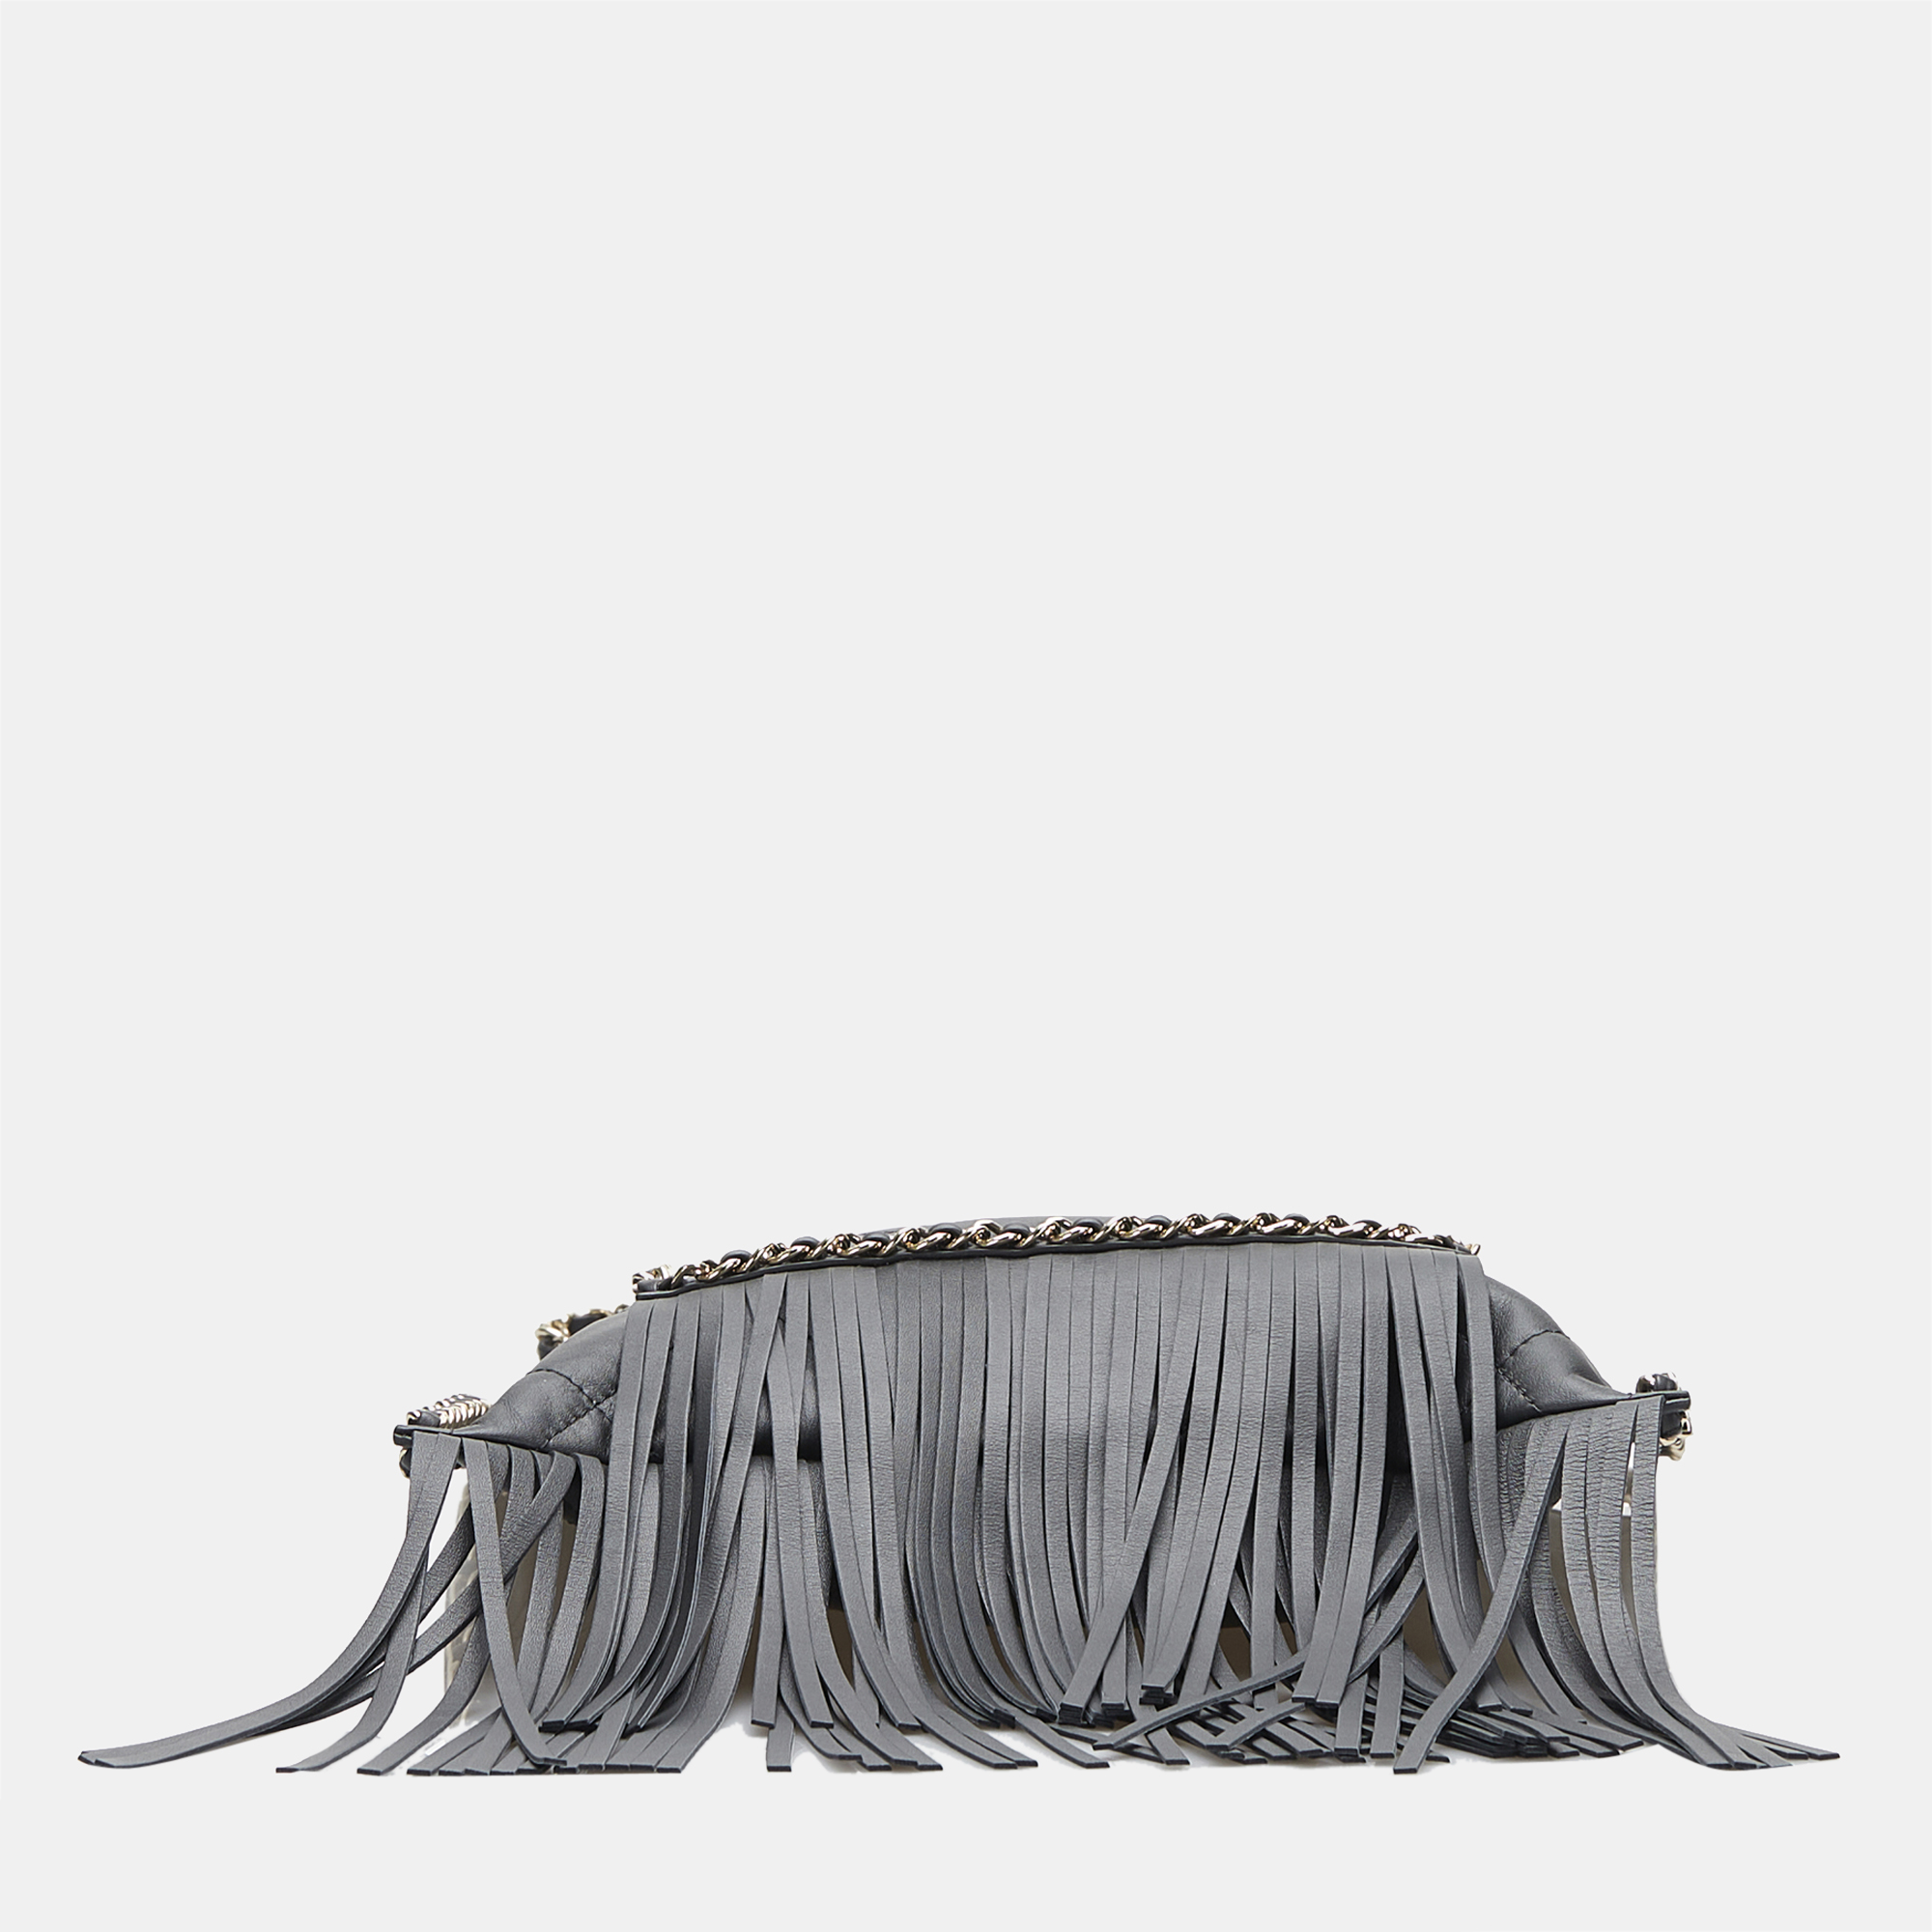 Chanel Black Small Fringe Shopping Bag